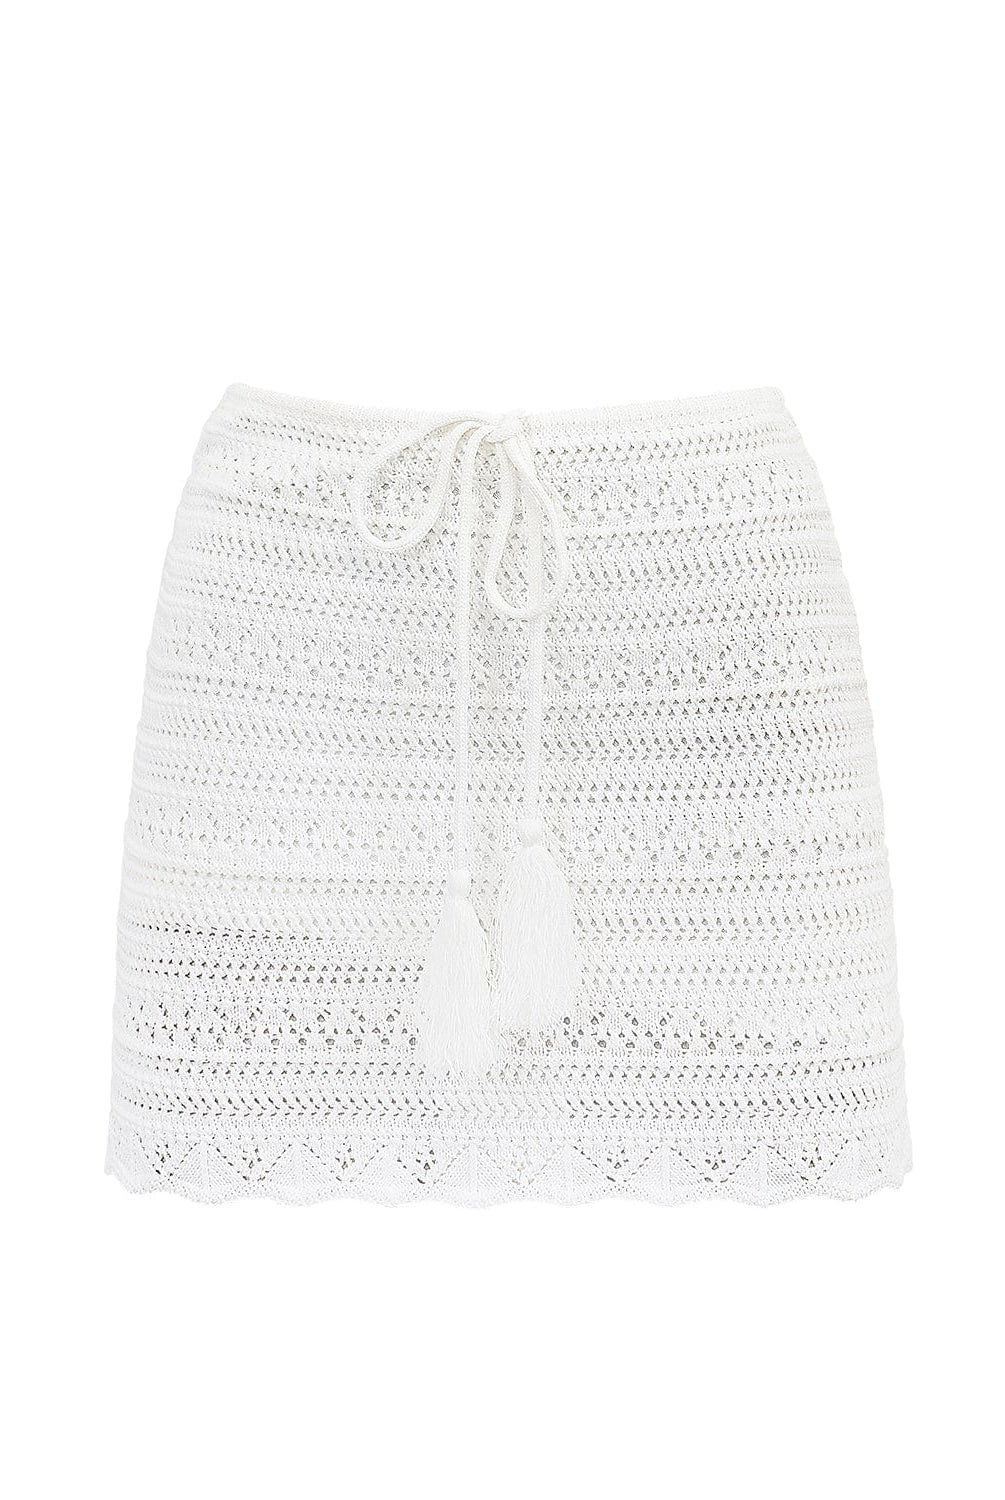 A white crochet skirt against a white wall. 